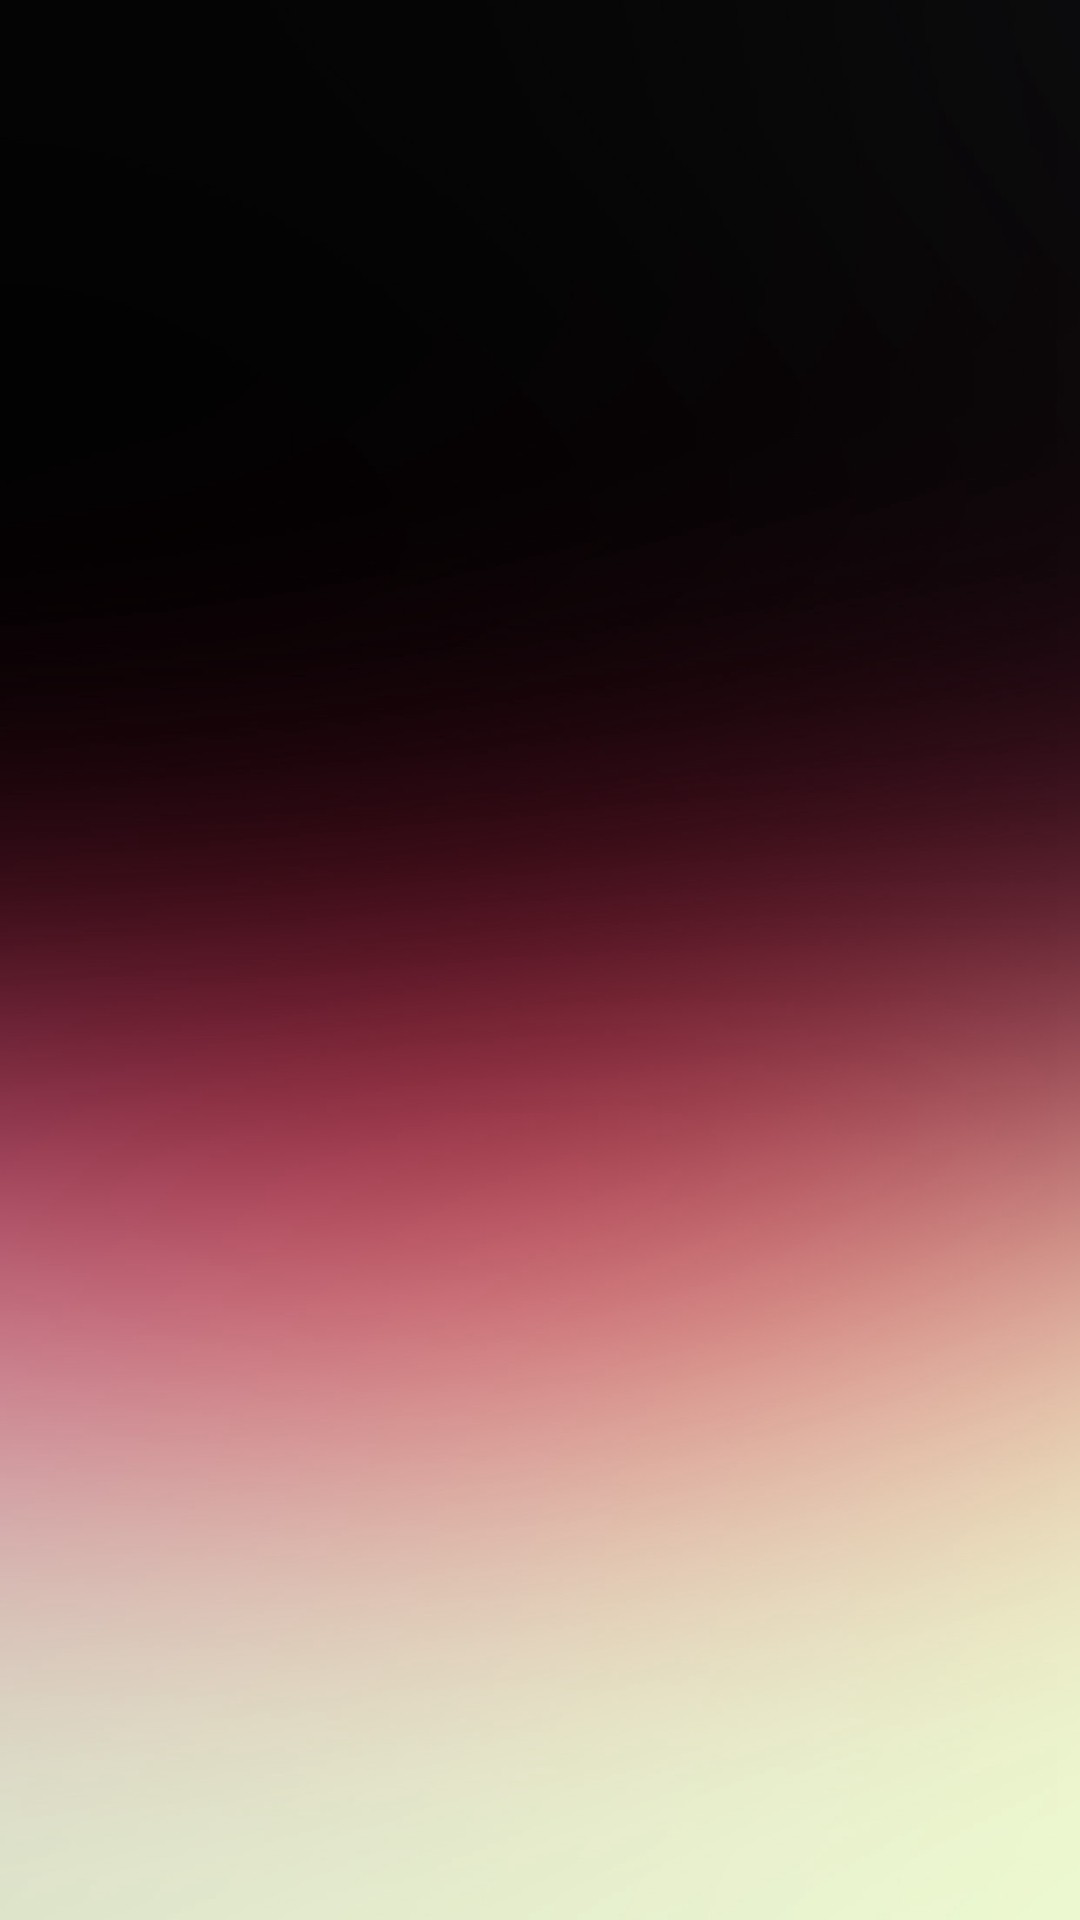 1080x1920 Dark Red Bokeh Gradation Blur Pink iPhone 6 Wallpaper .